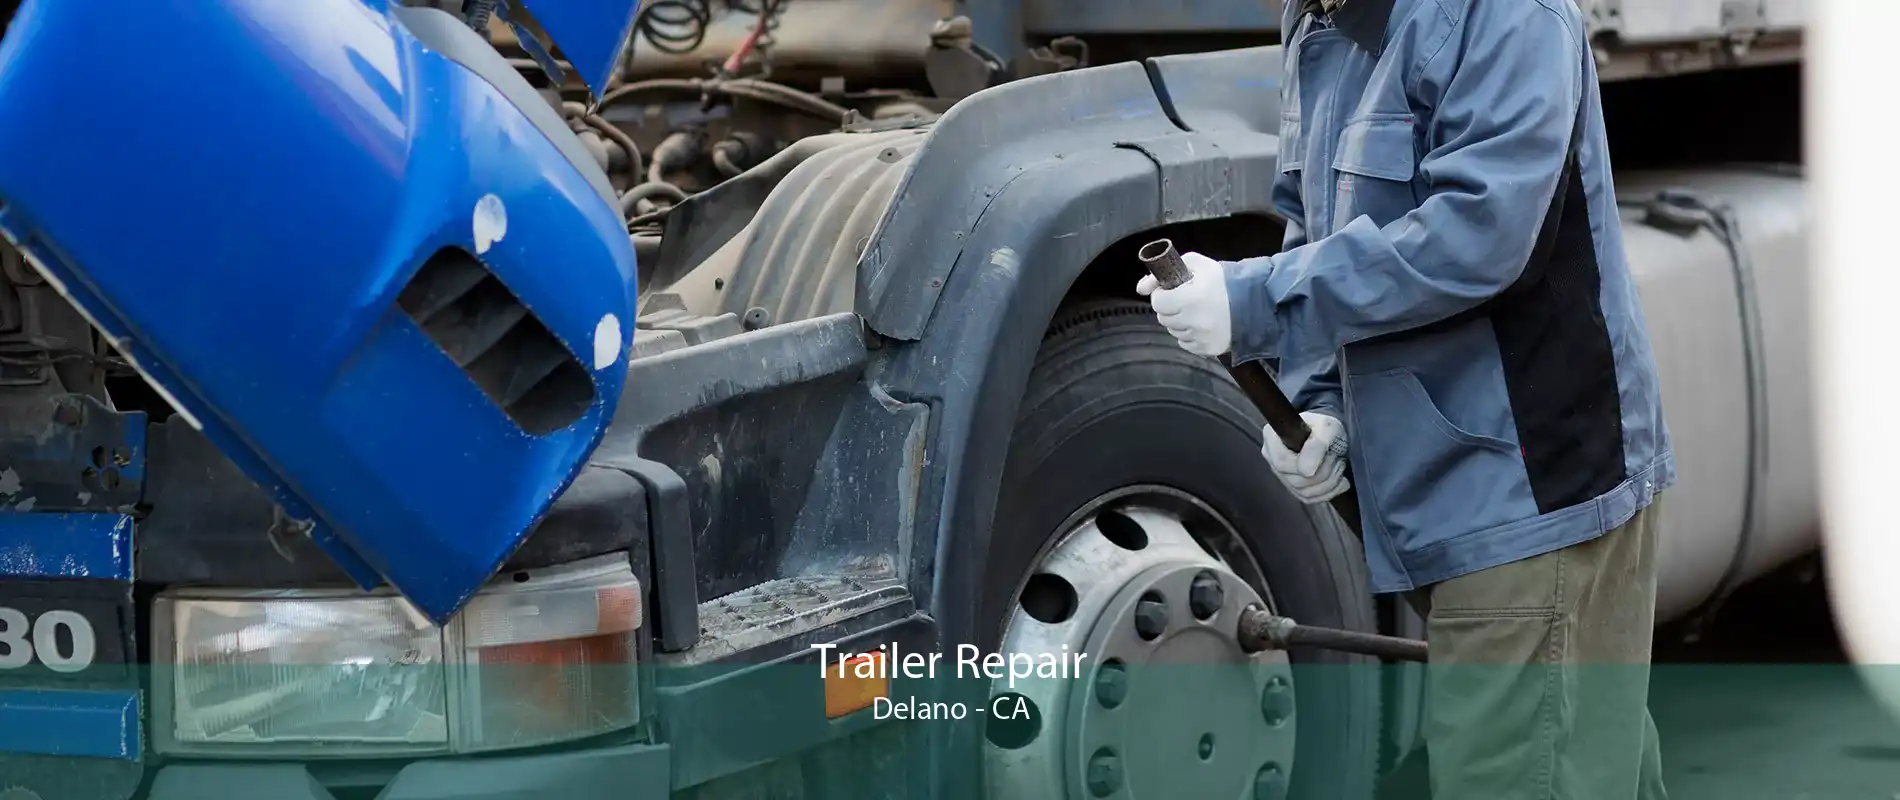 Trailer Repair Delano - CA